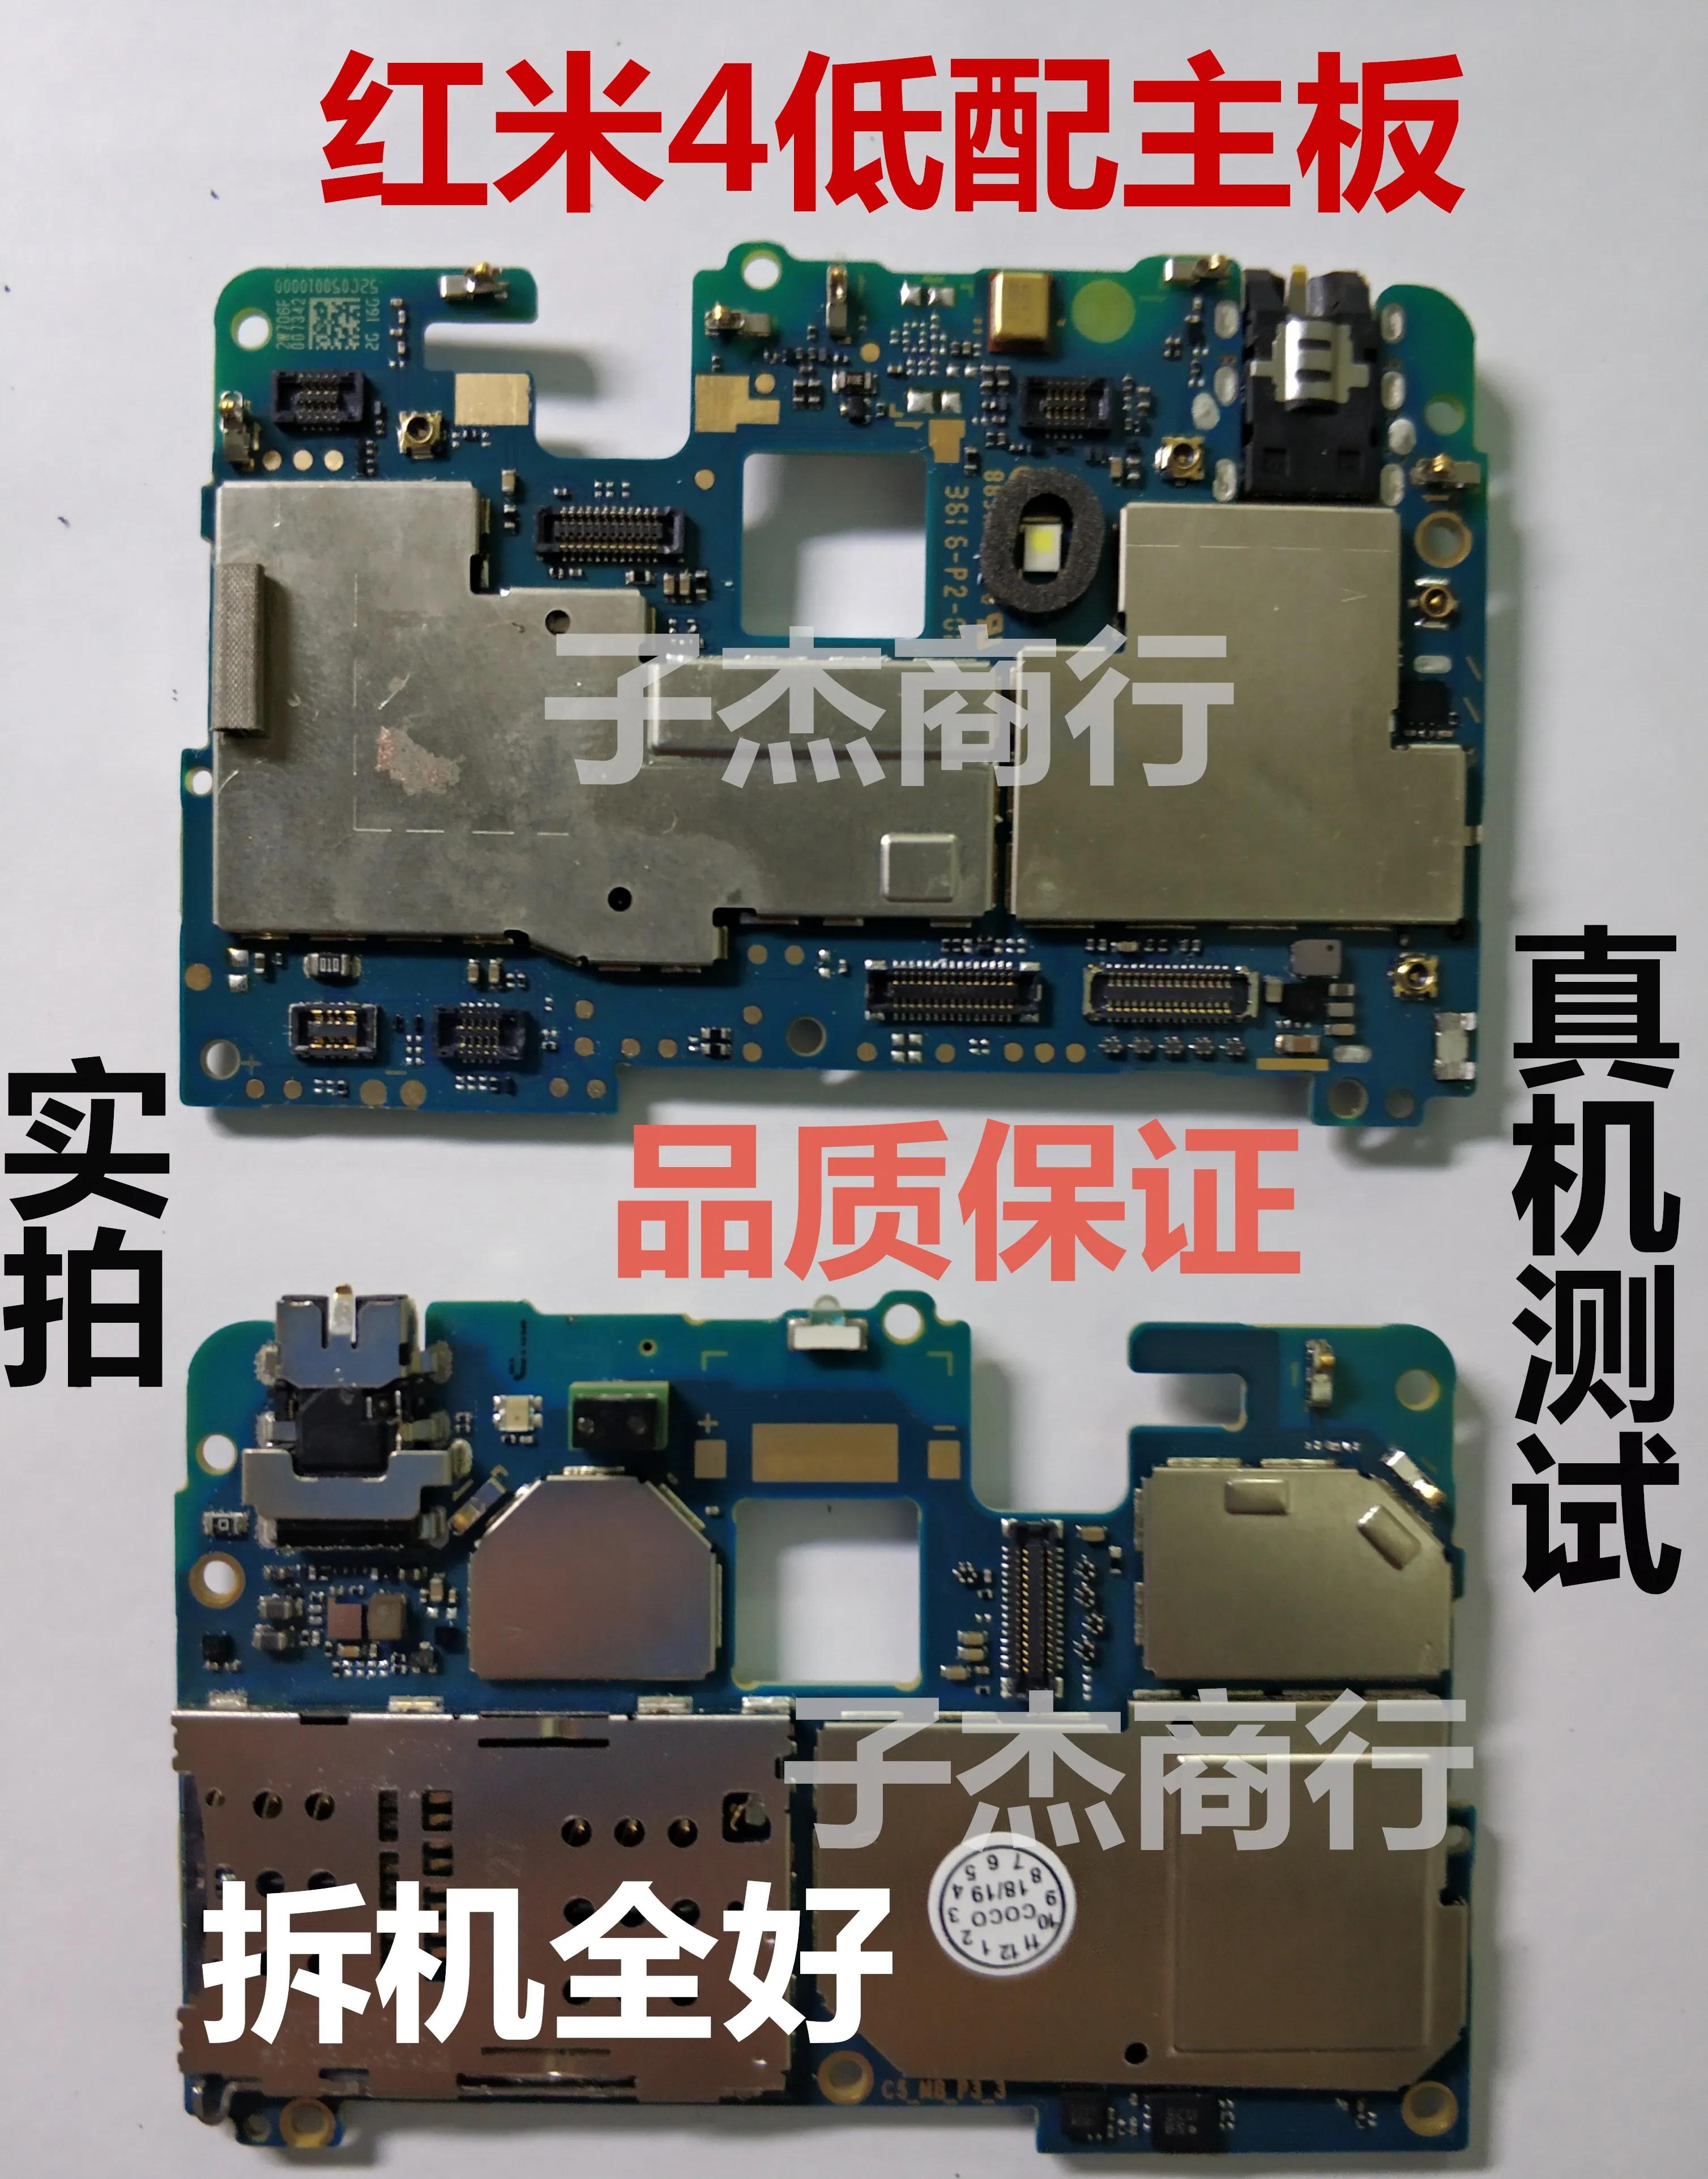   Xiaomi Redmi 4 Pro      ī  Ĩ ÷ ̺ 3GB 32GB